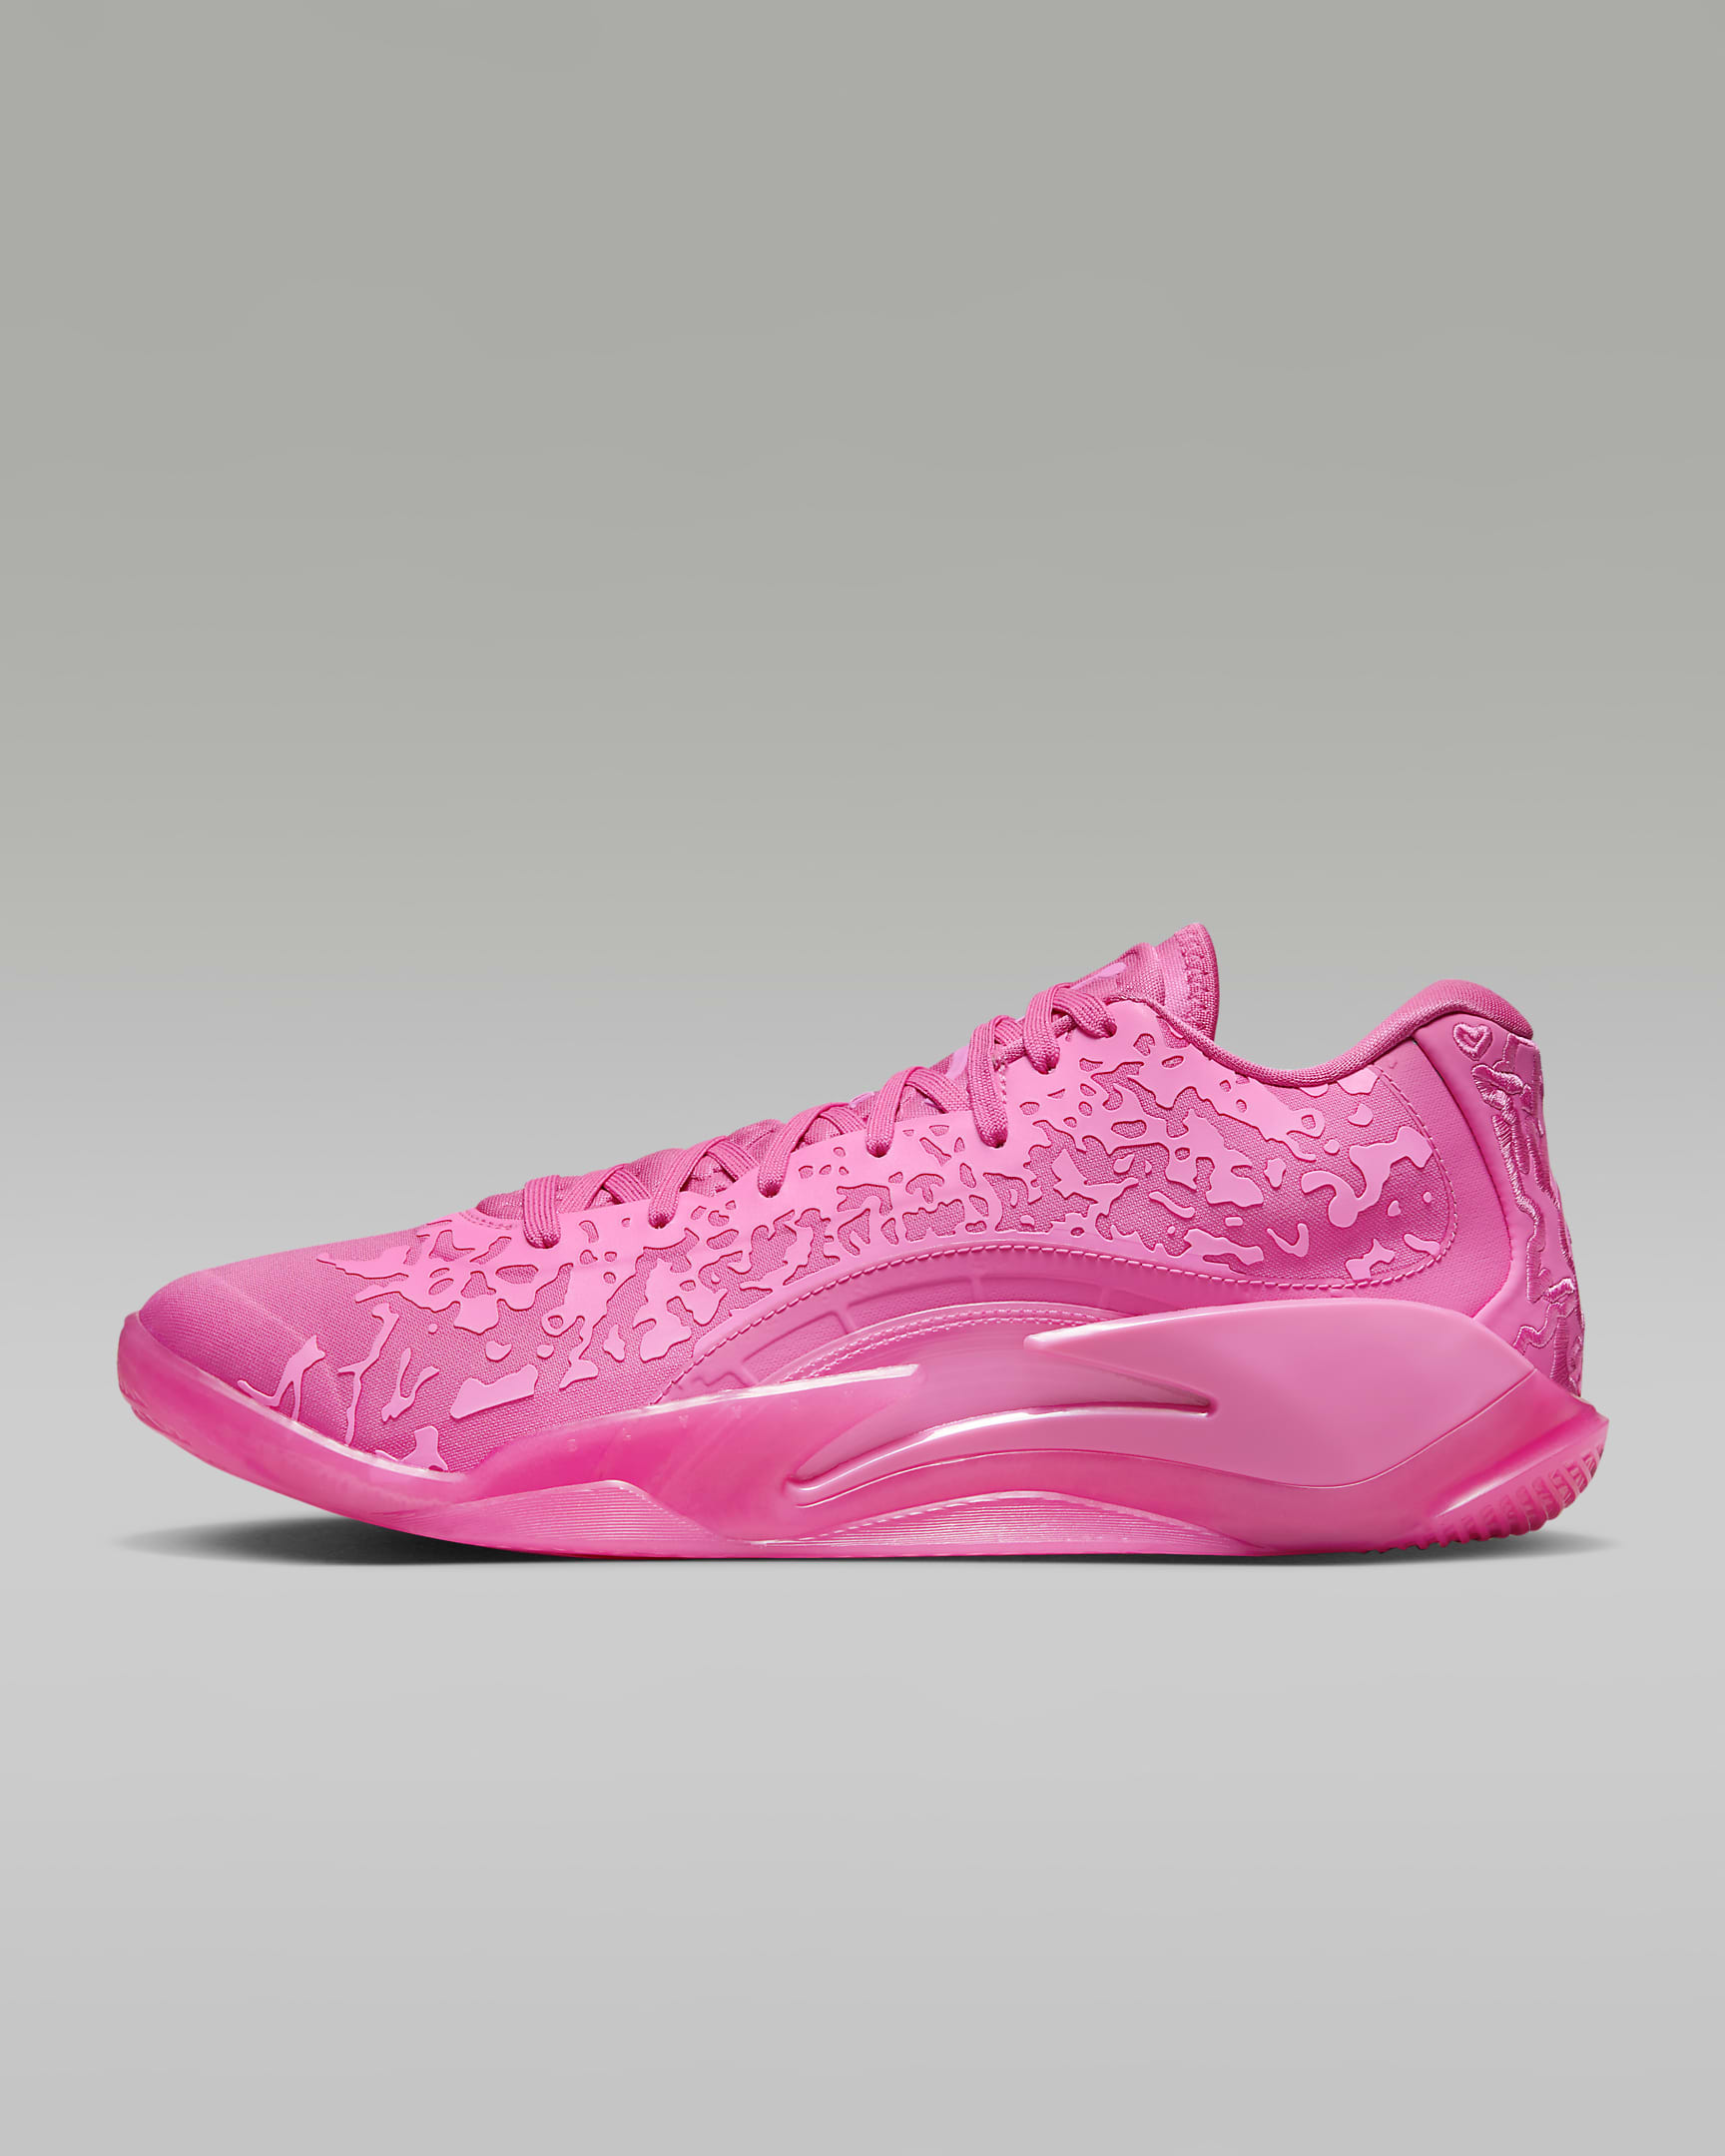 Zion 3 Basketballschuh - Pinksicle/Pink Glow/Pink Spell